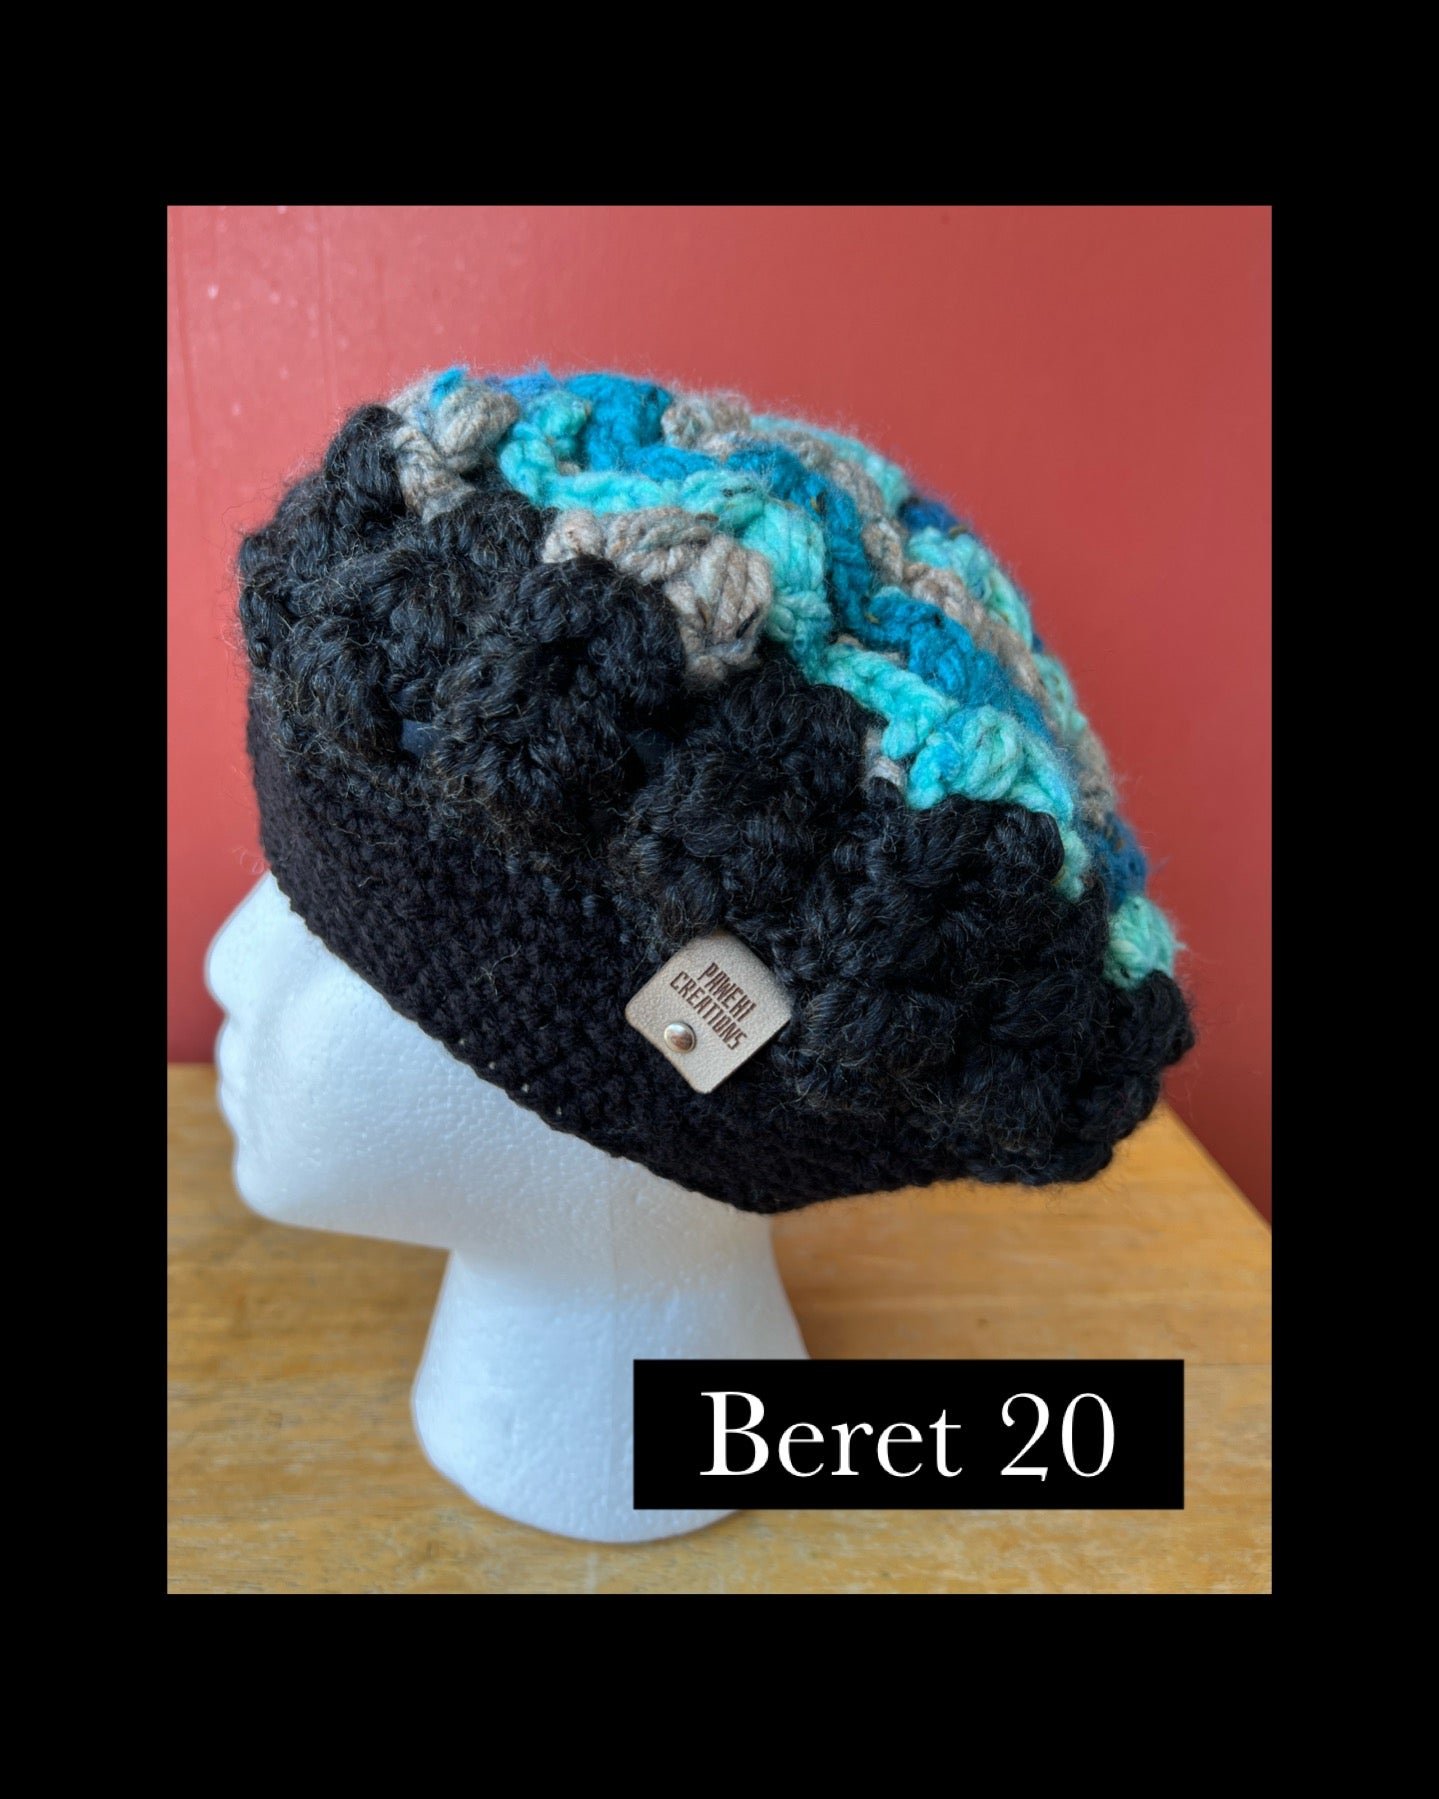 Pop-Up Mākeke - Pawehi Creations - Crochet Beret Hat - Style #20